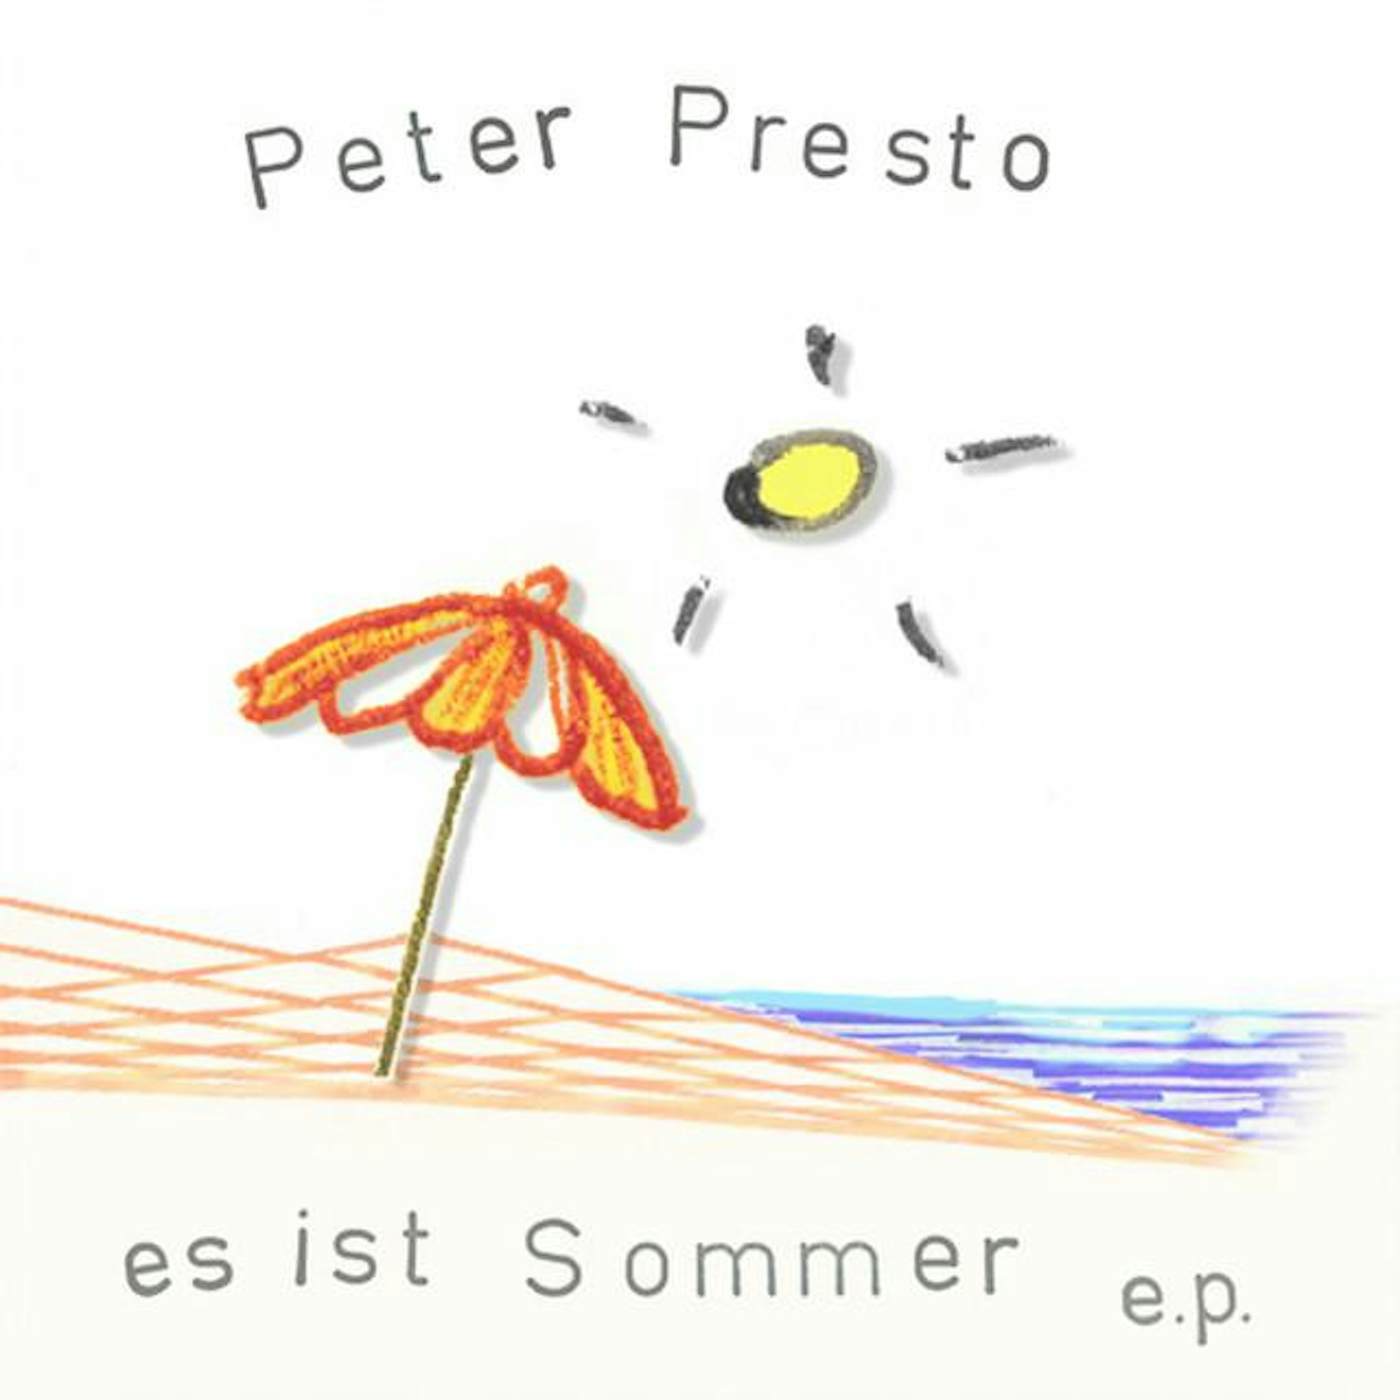 Peter Presto